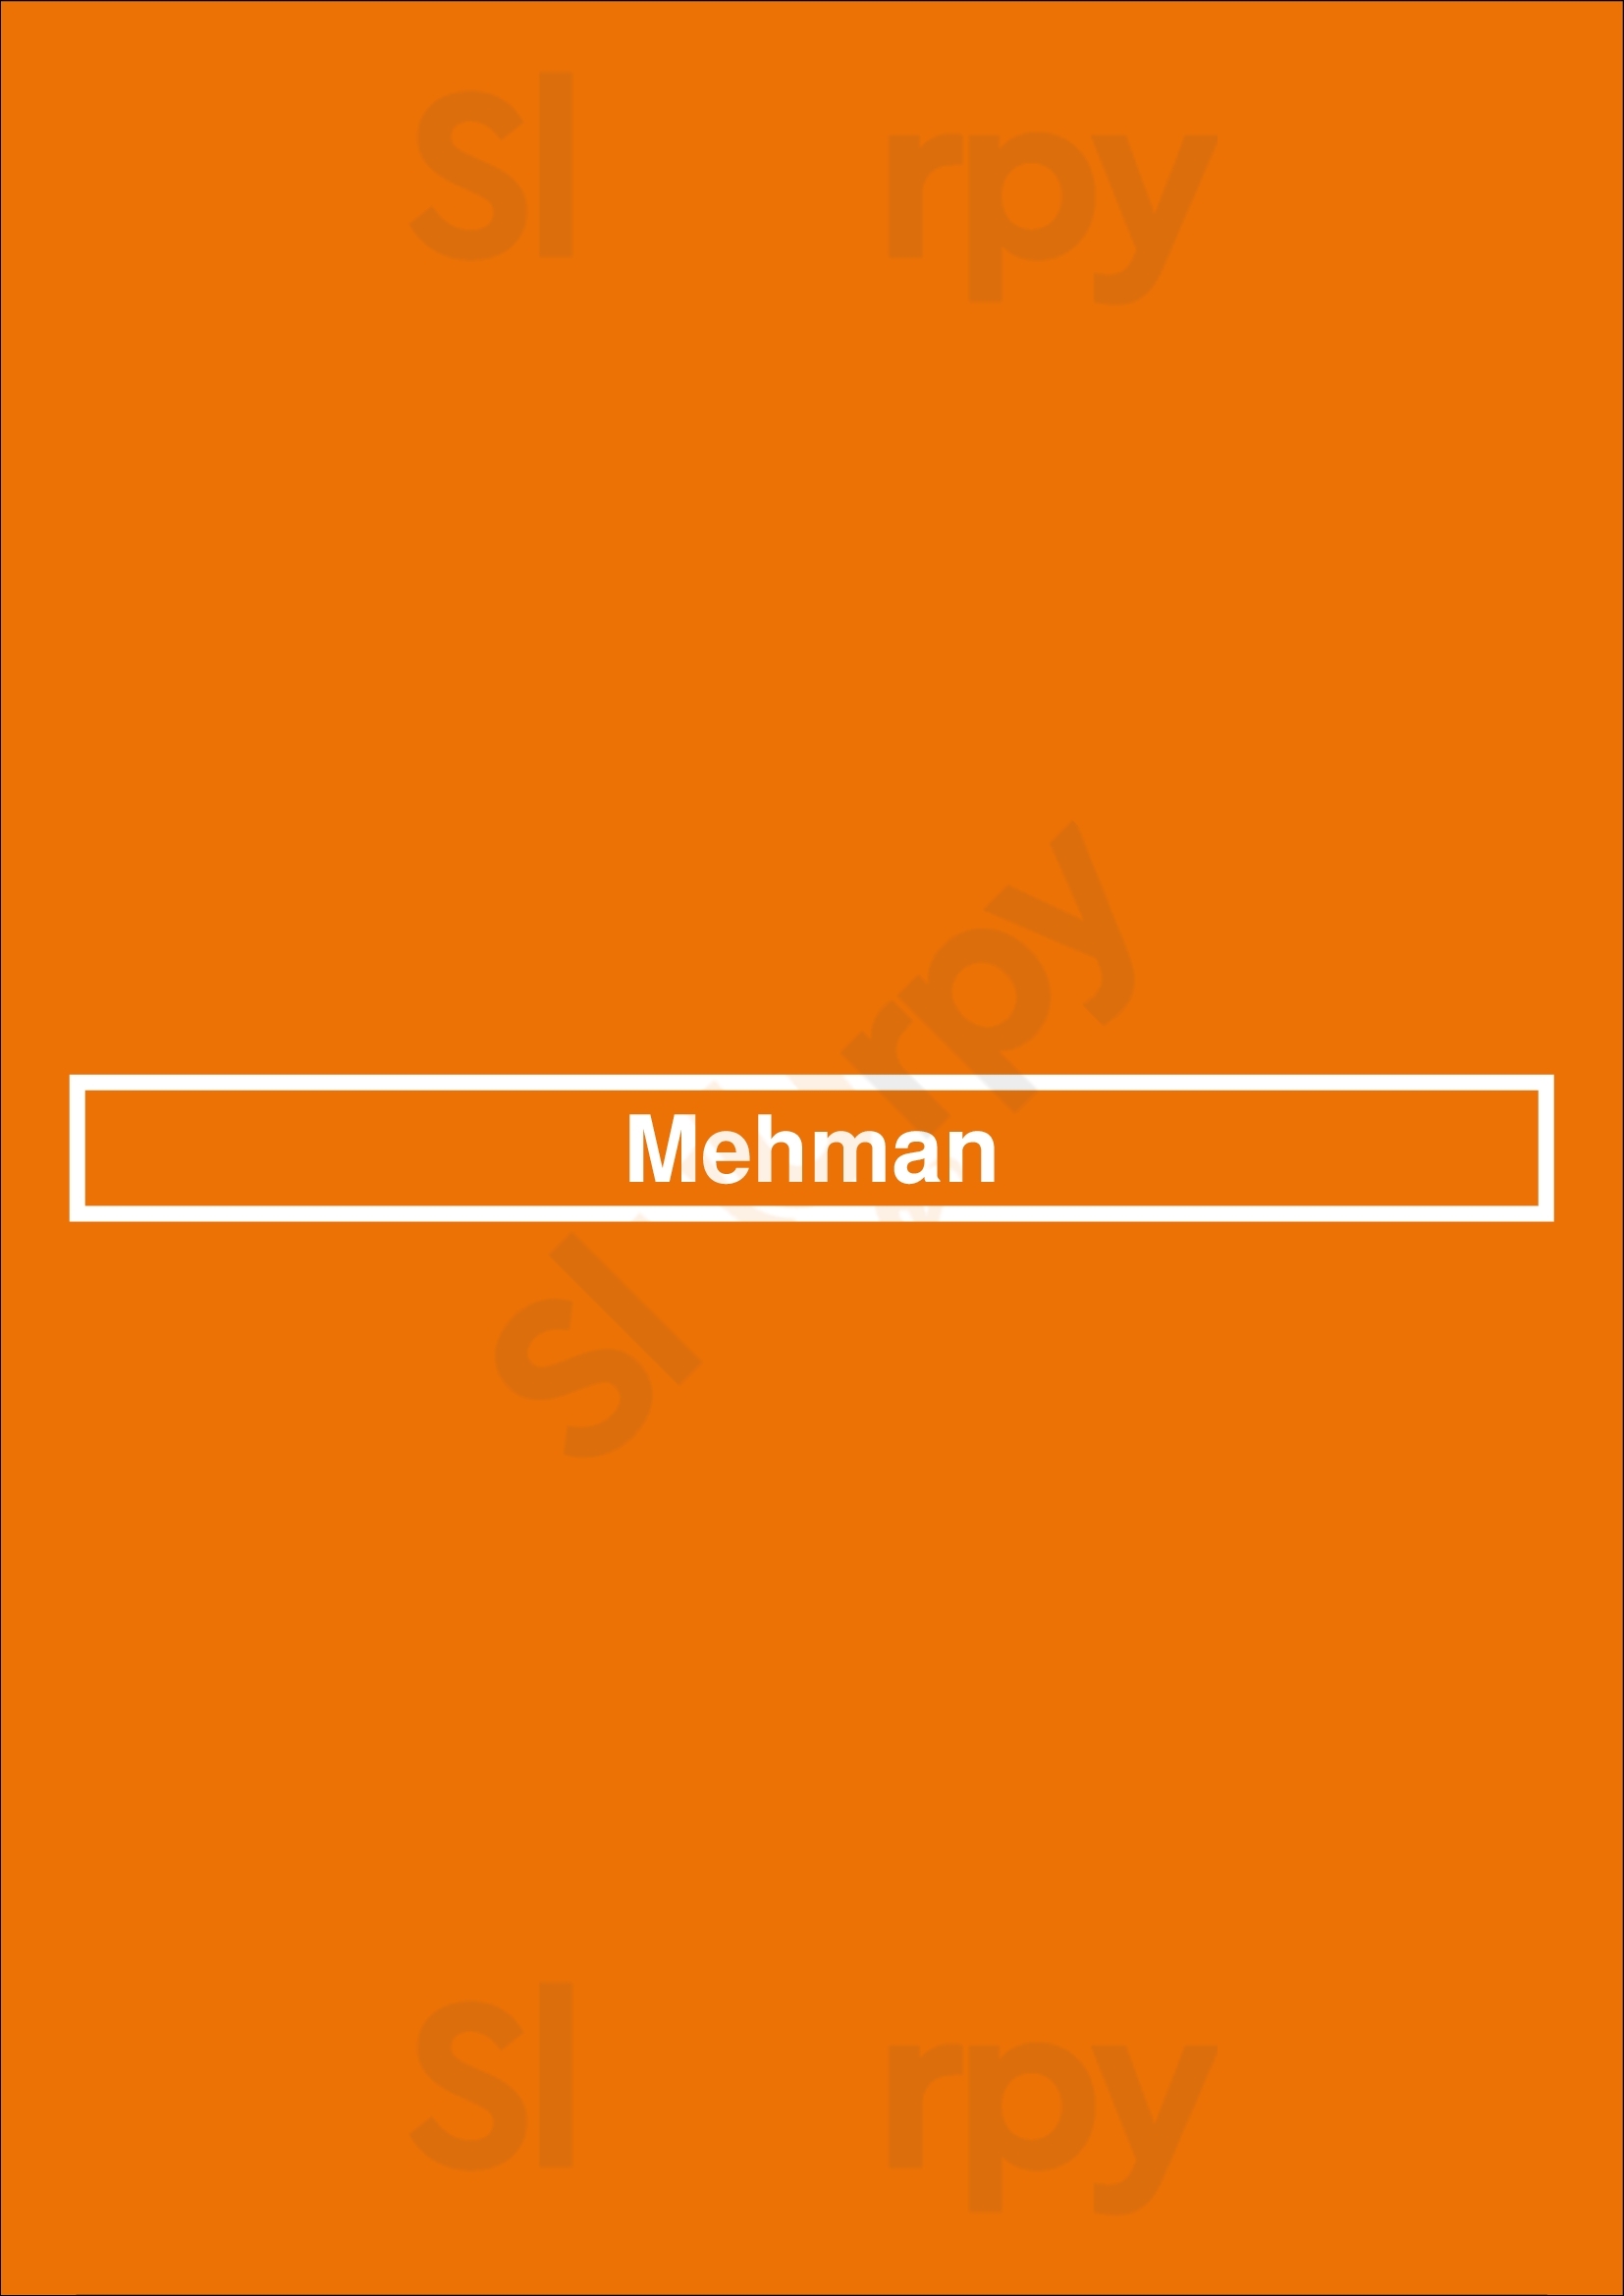 Mehman North Vancouver Menu - 1